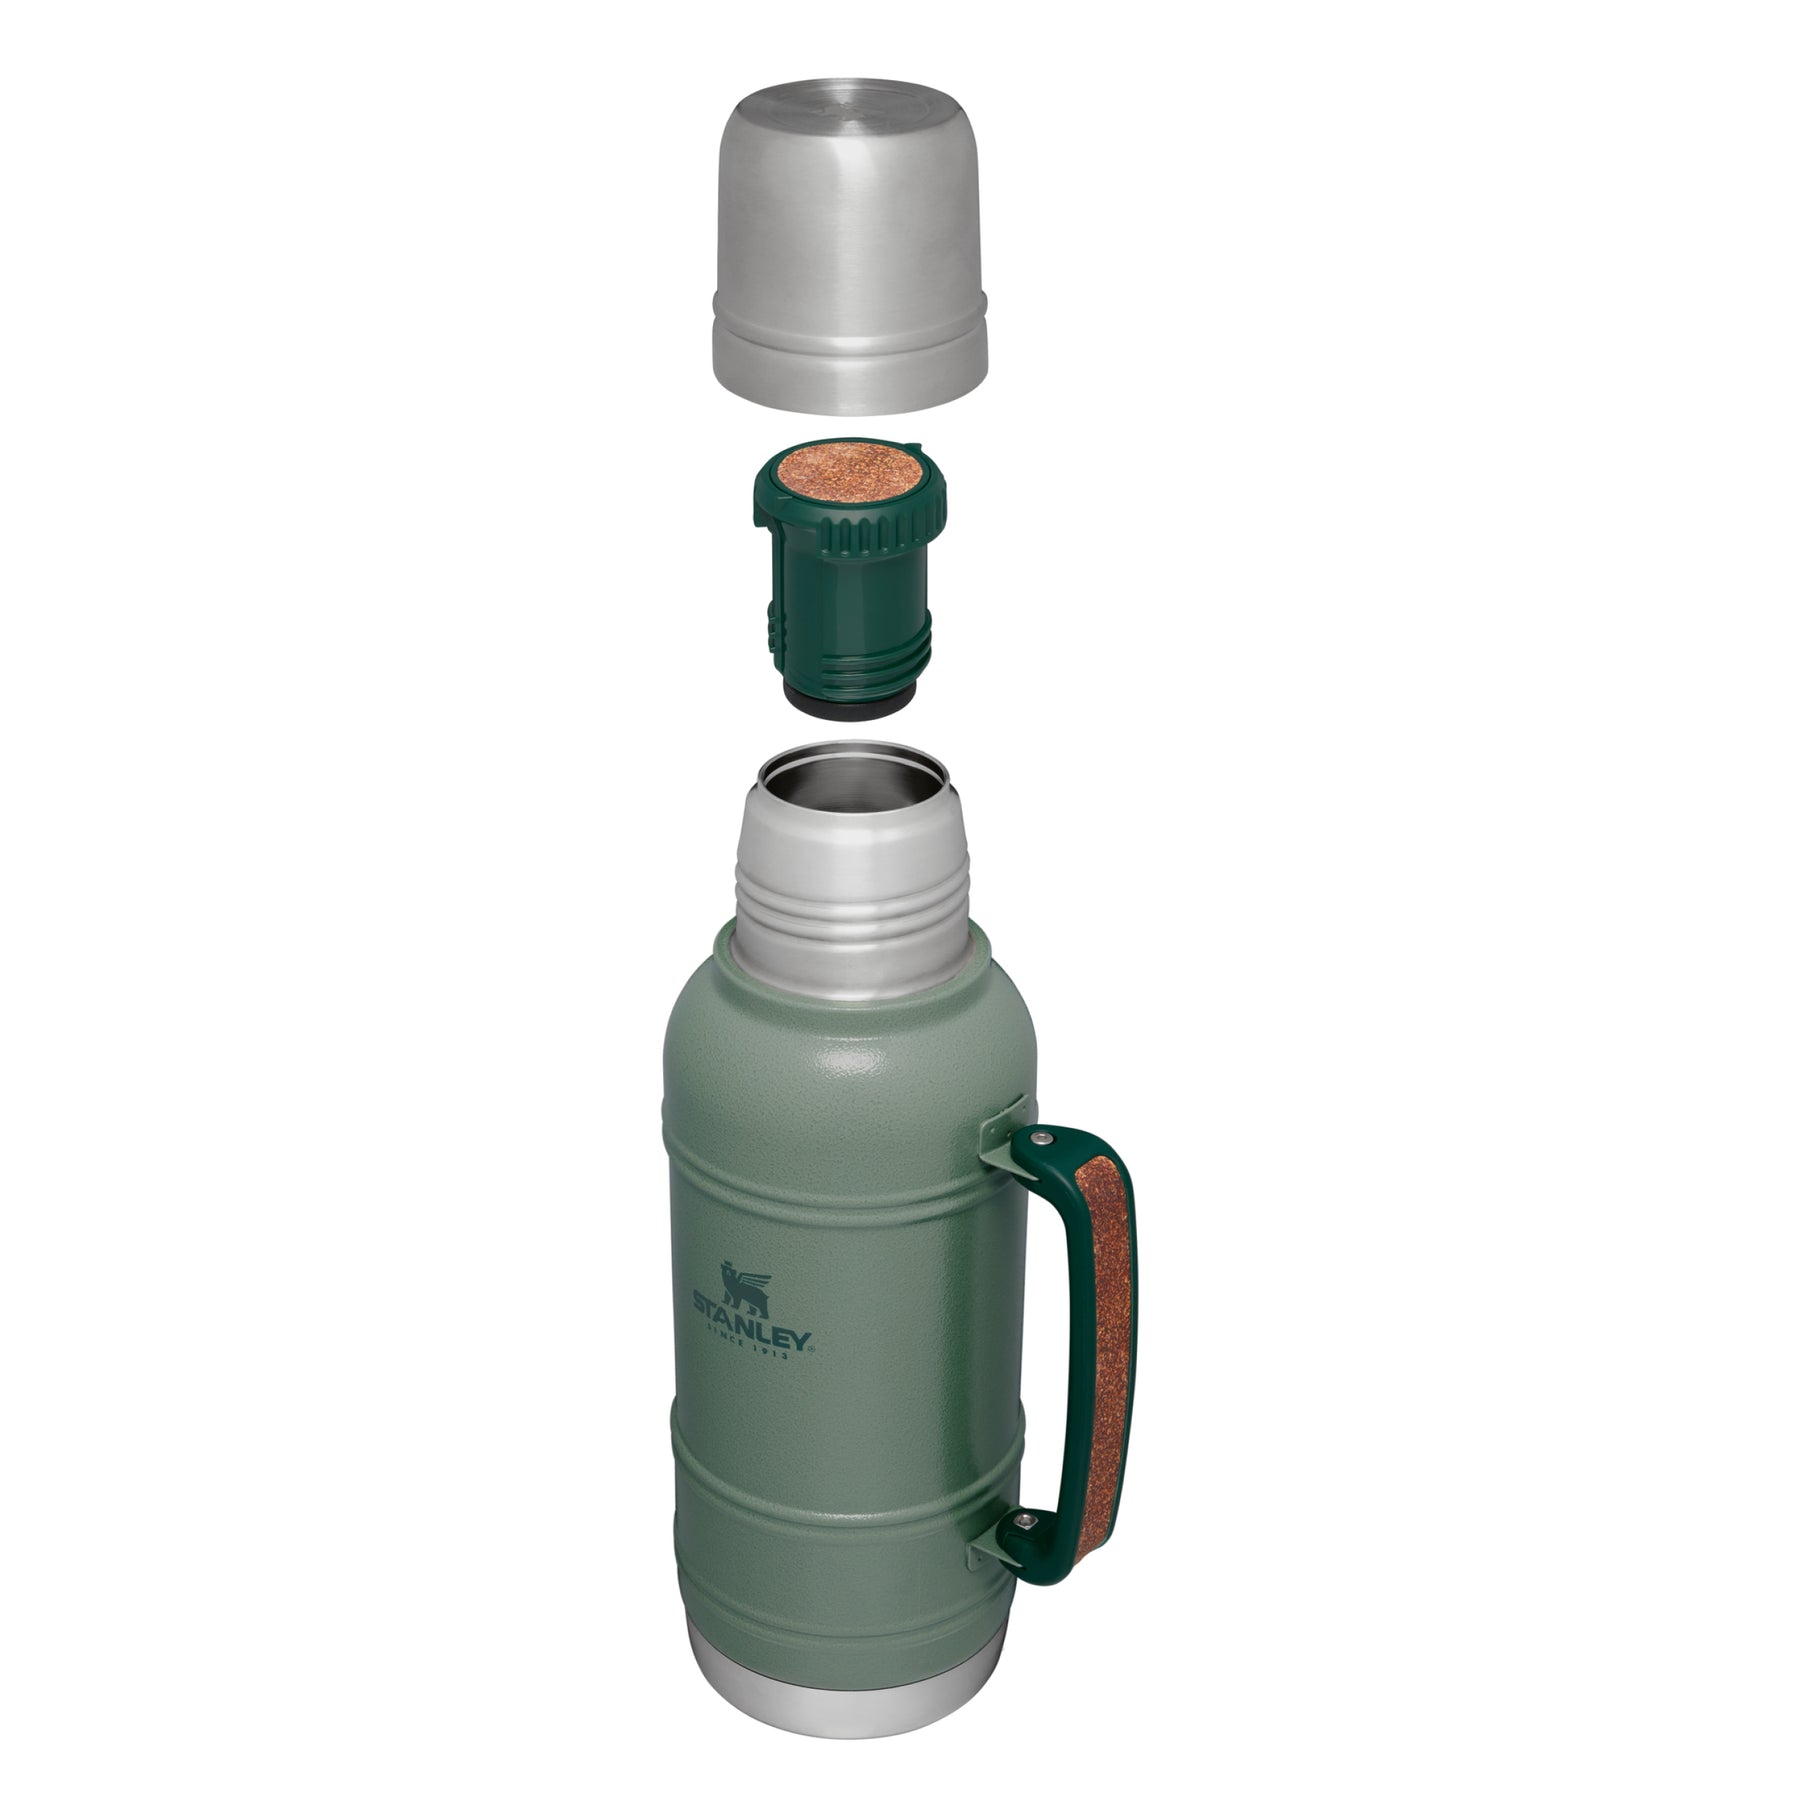 Stanley 1.3L Stainless Steel Vacuum Water Bottle, Green